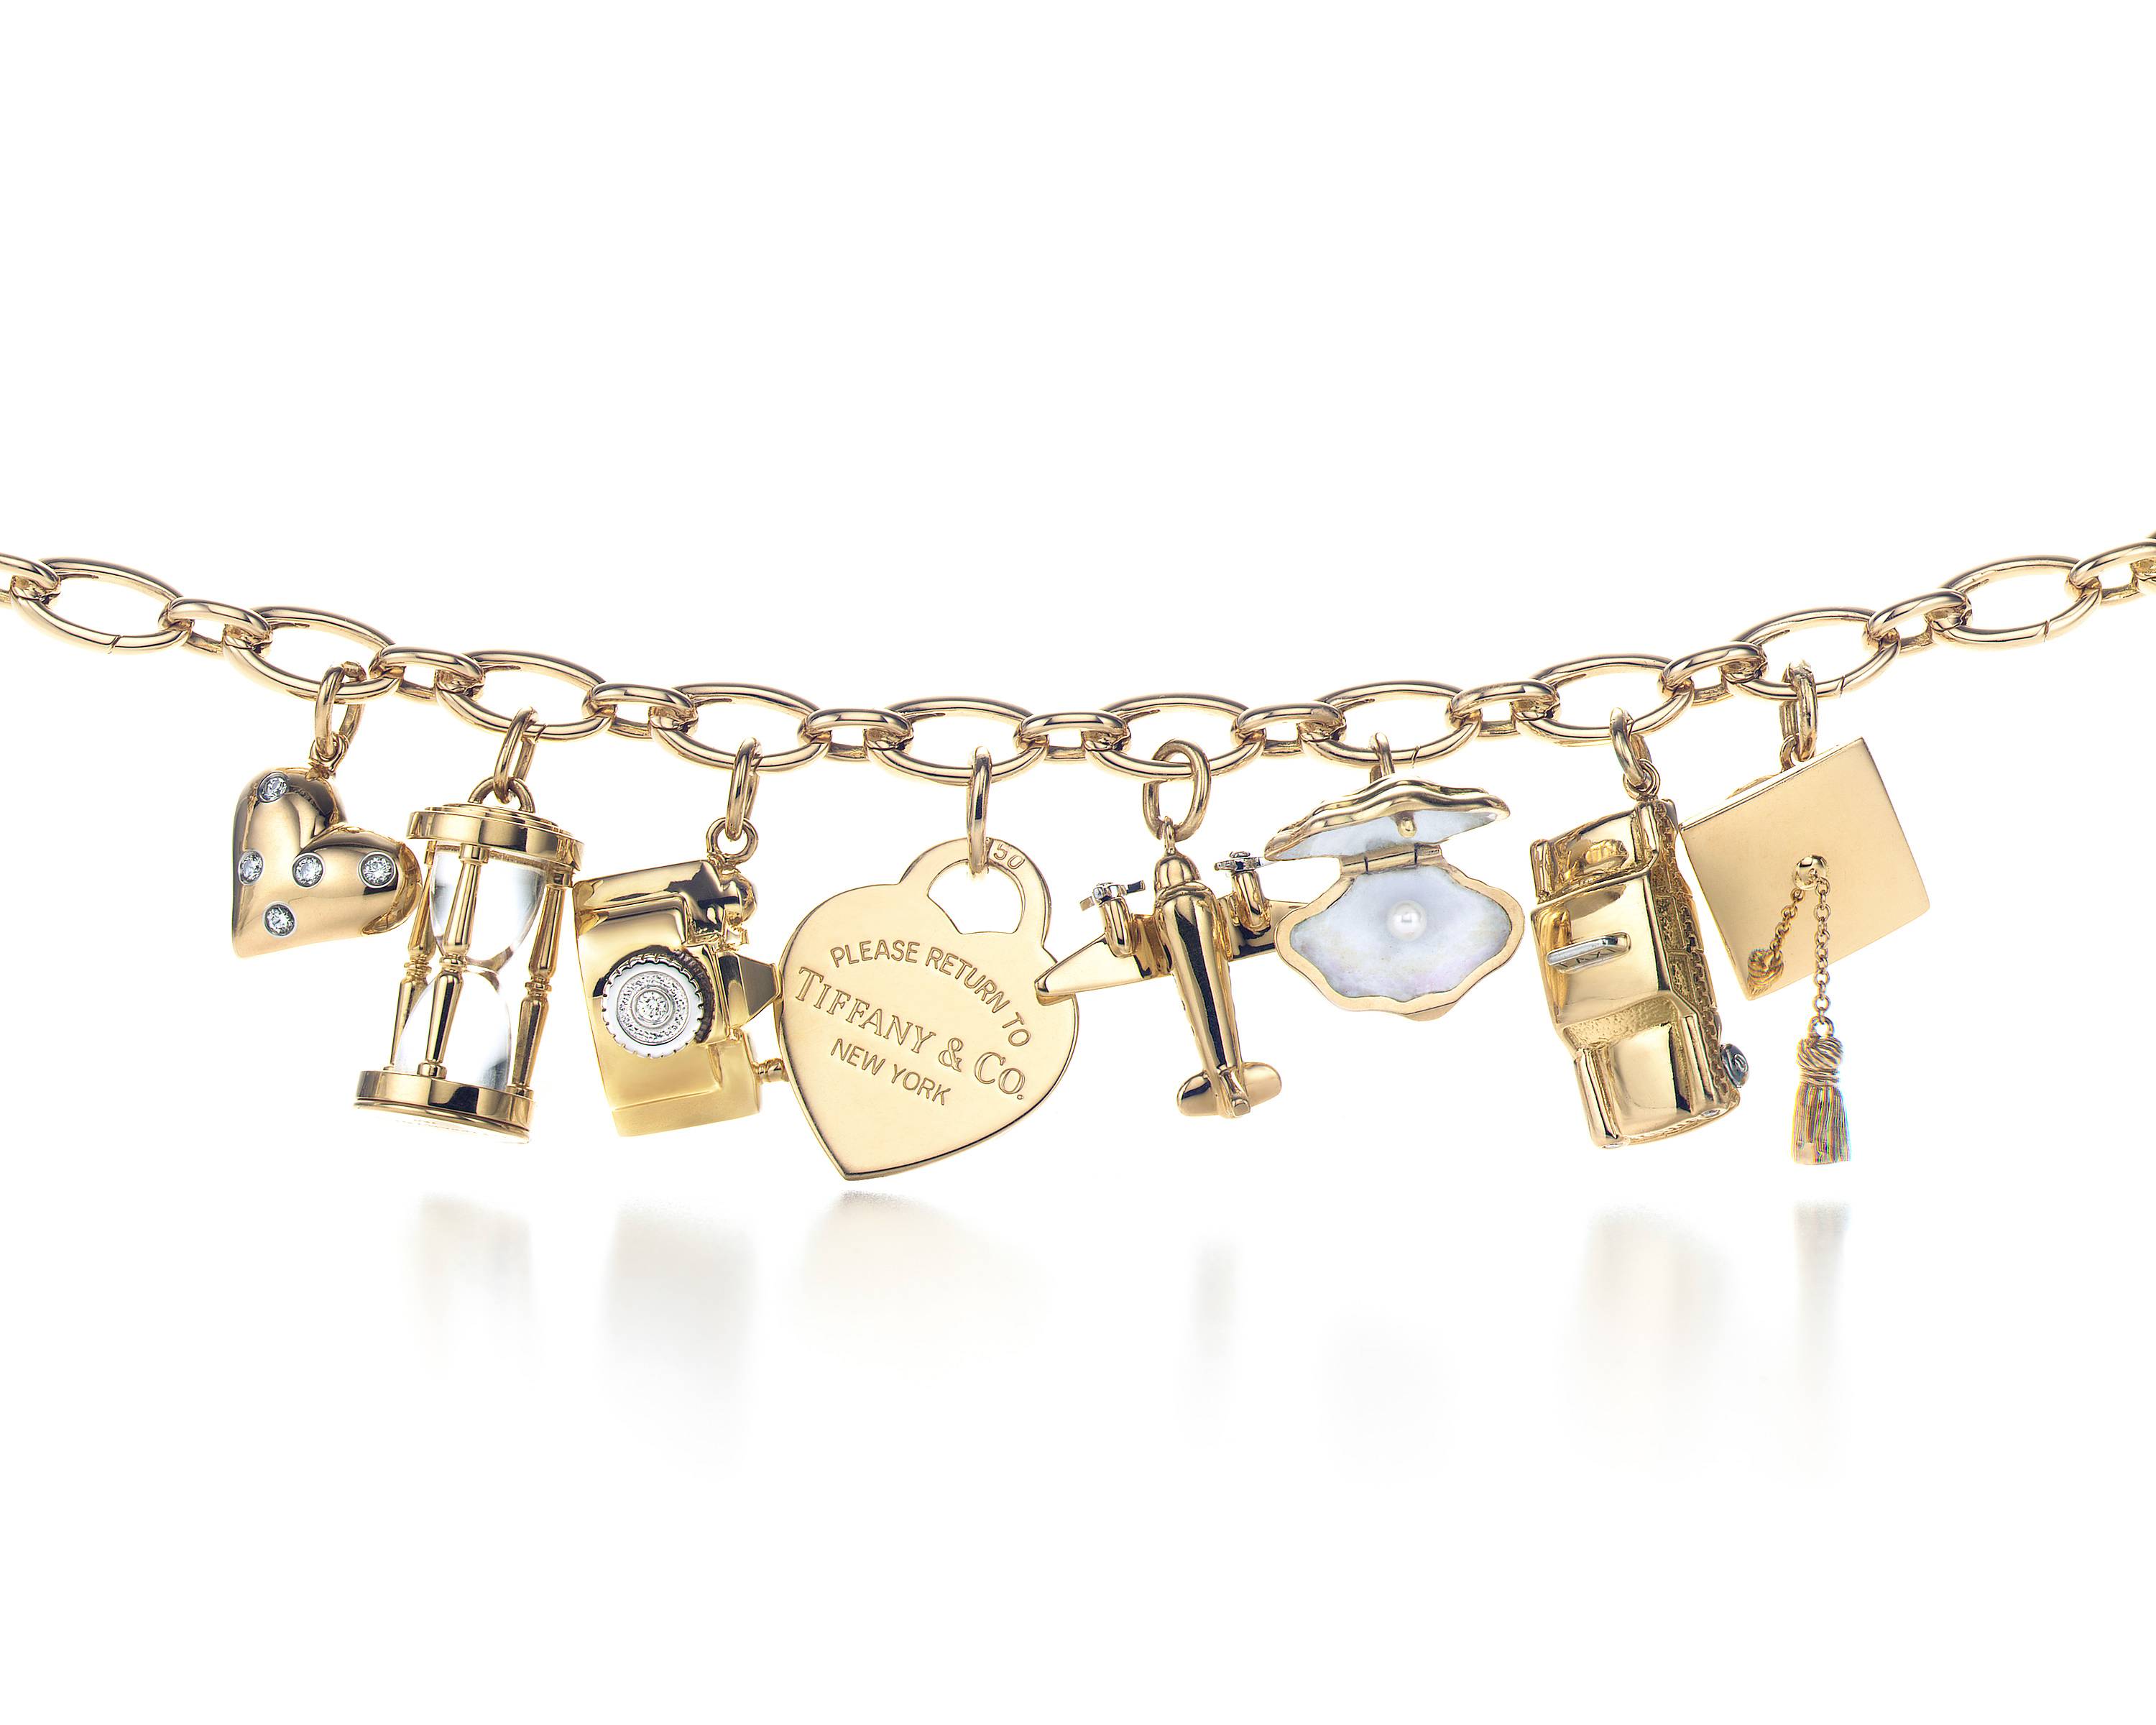 Tiffany  Co: Charm bracelet in gold